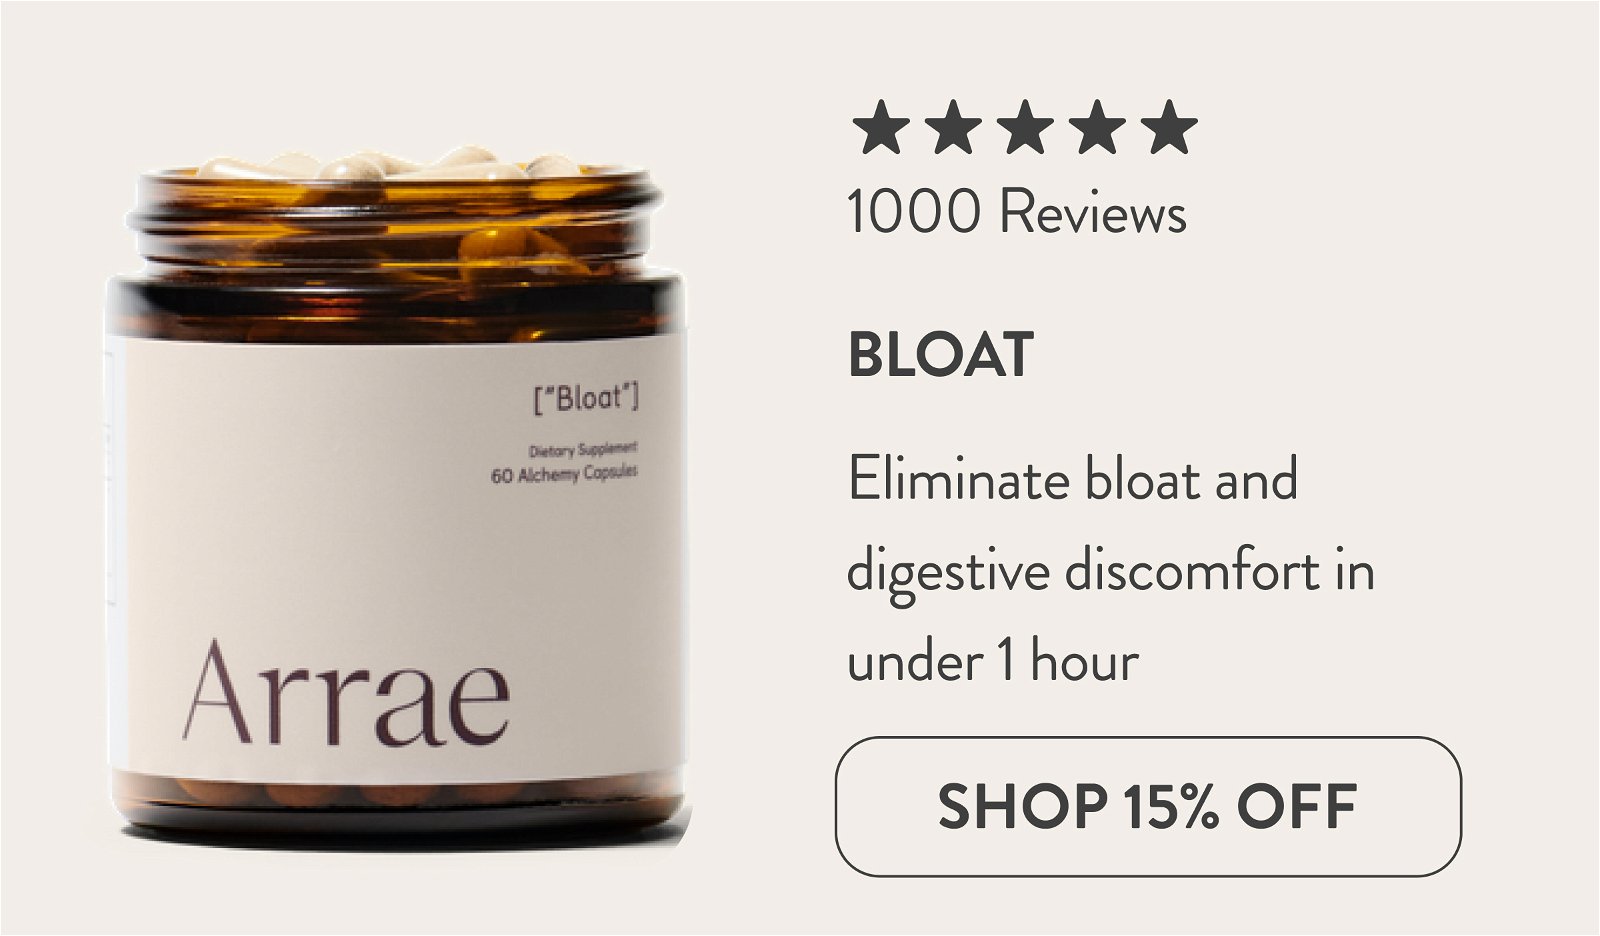 Arrae Bloat - Eliminate bloat and digestive discomfort in under 1 hour